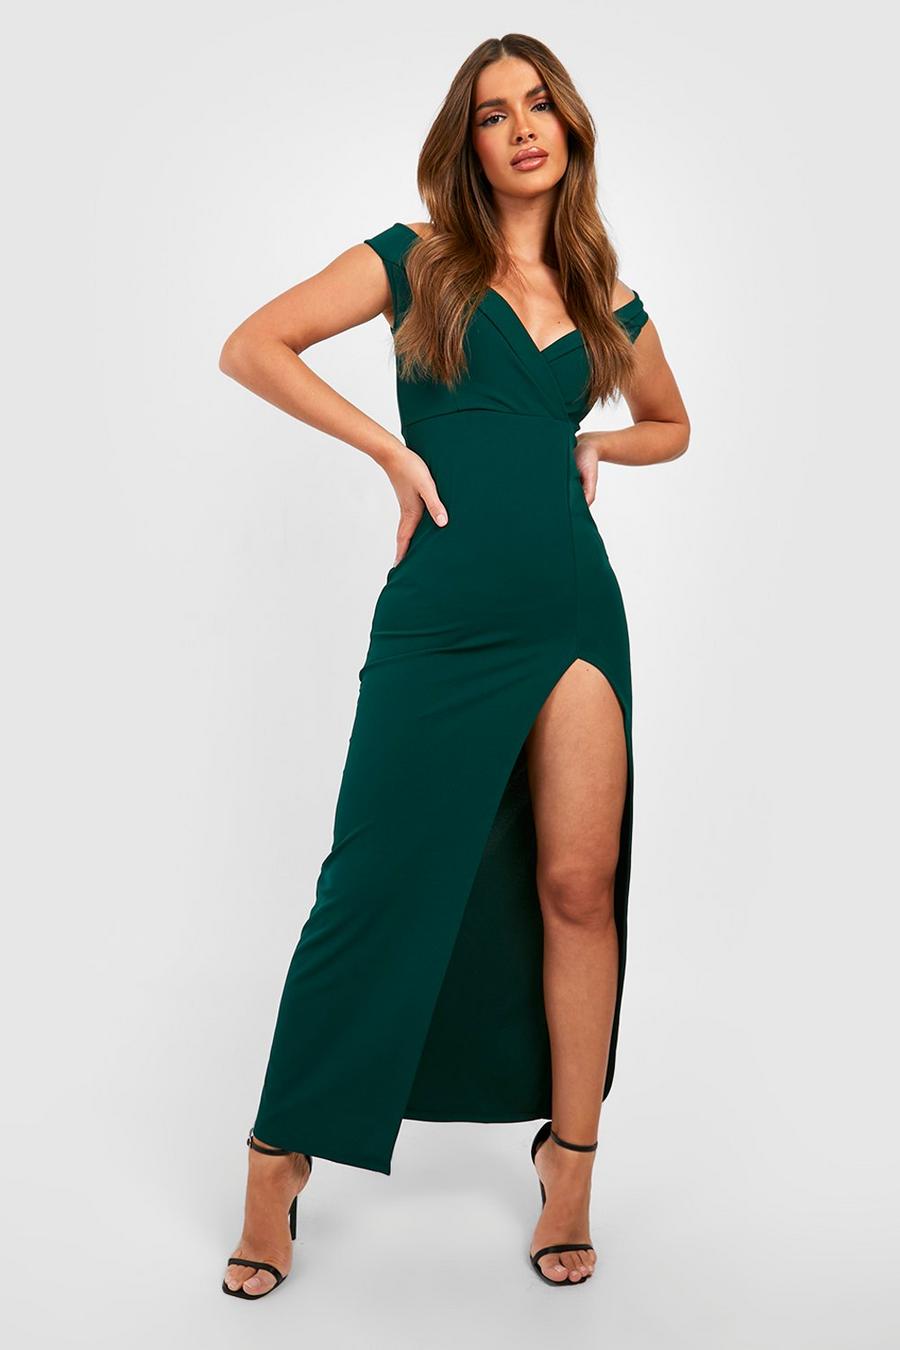 Green Dresses | Emerald, Teal & Khaki Green Dresses | boohoo Australia